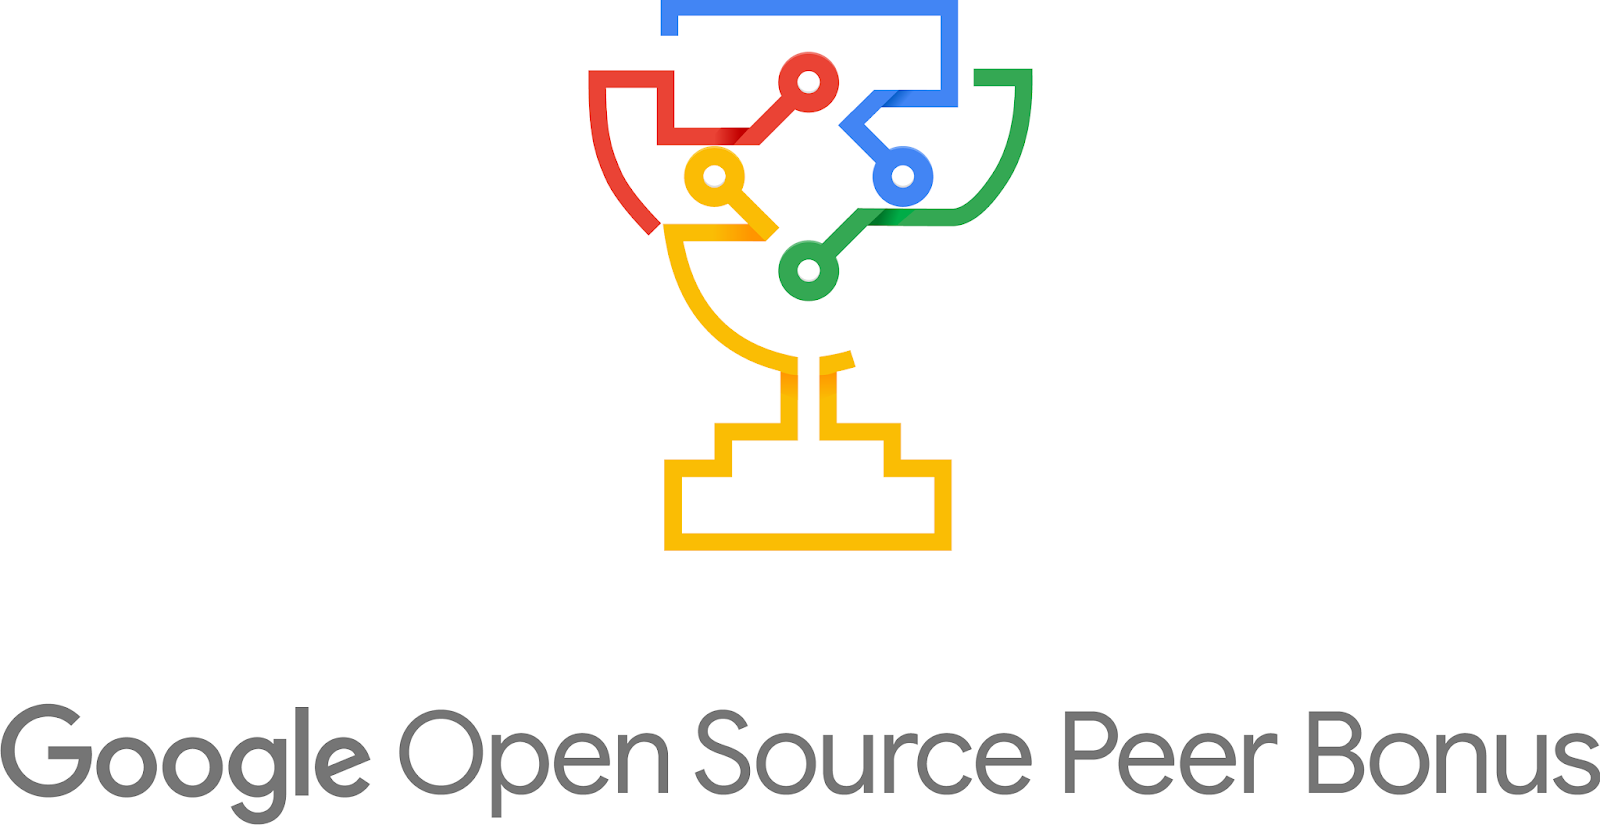 OpenSource ，明确定义：众包开源项目数据